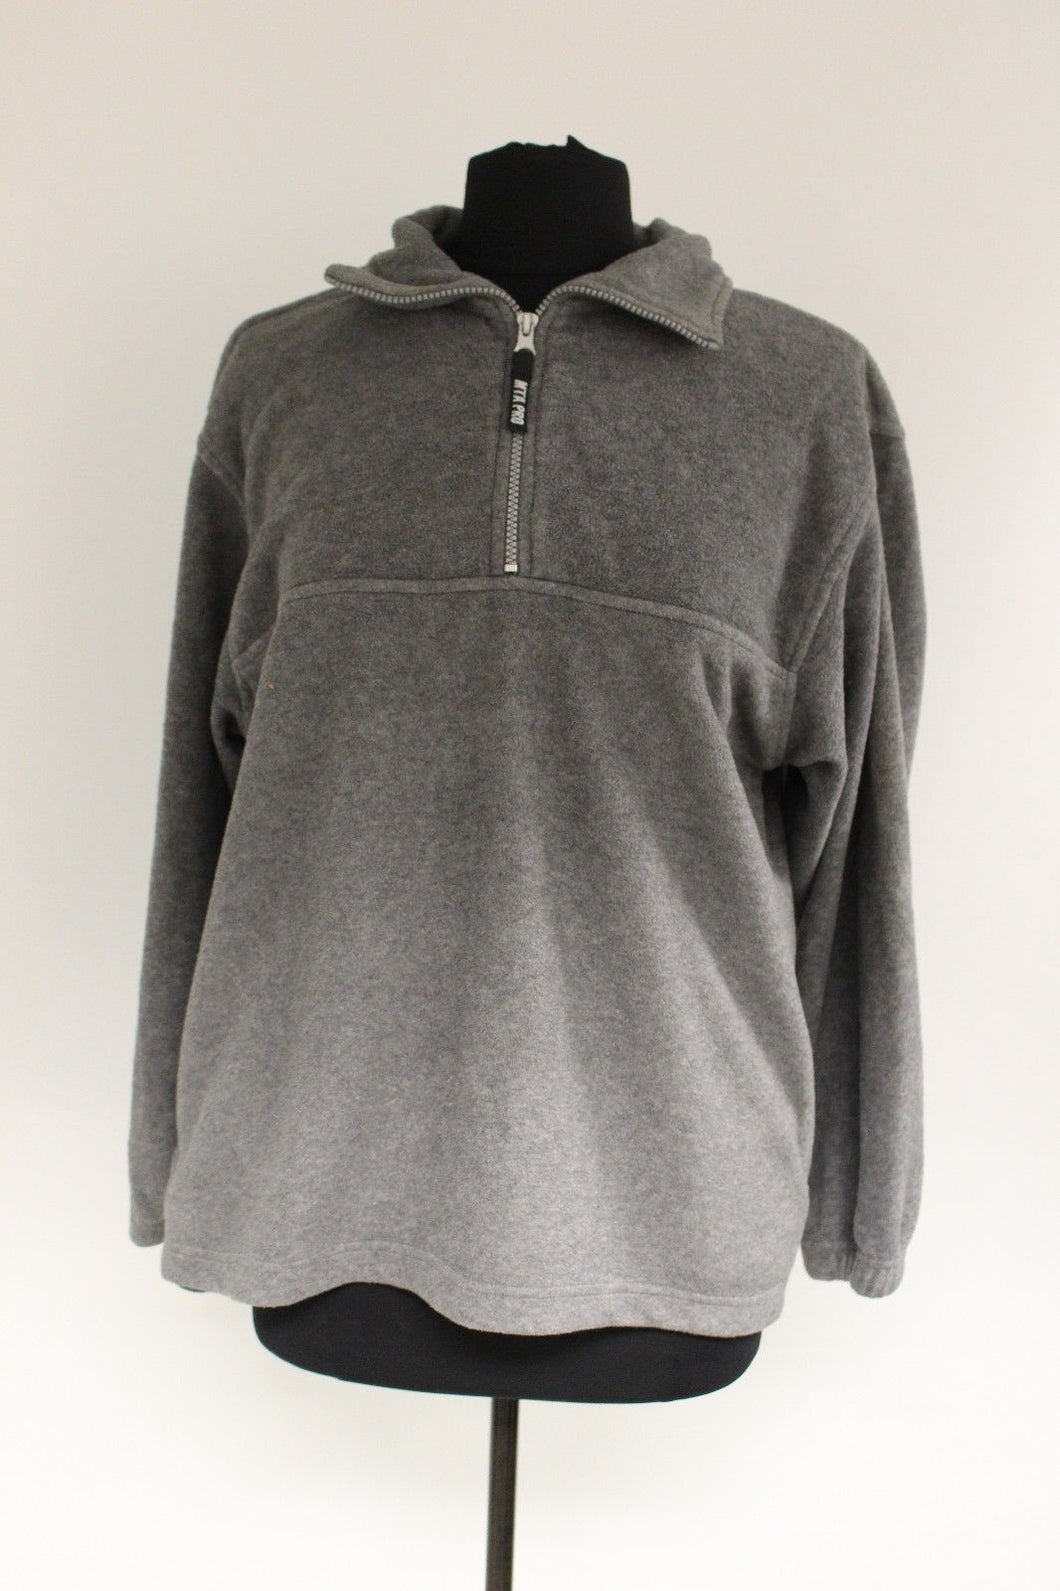 Simple Pleasures MTA Pro 3/4 Zip Pullover, Size: XL, Gray